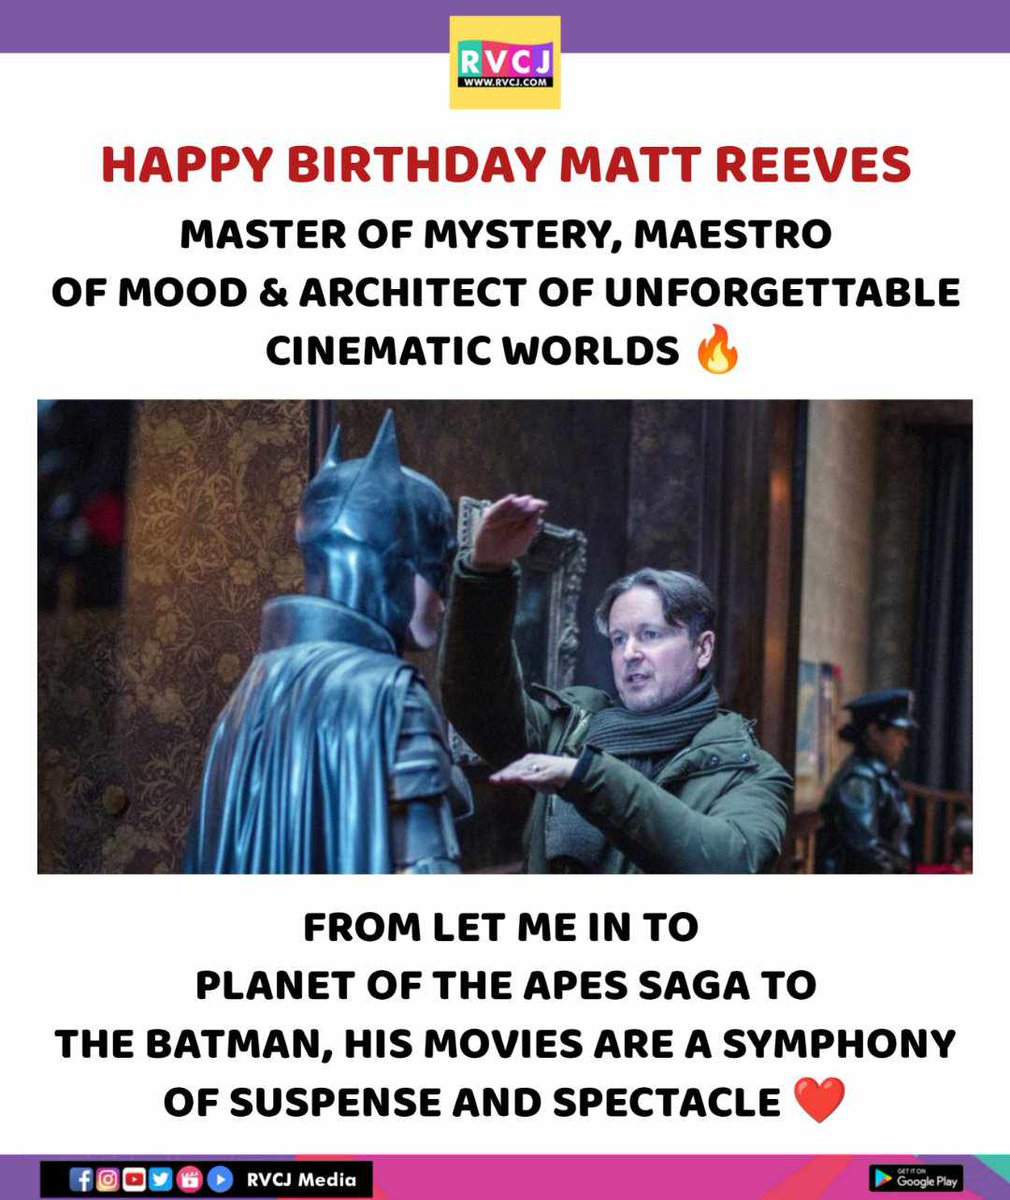 Happy Birthday Matt Reeves

#mattreeves #thebatman #planetoftheapes #letmein